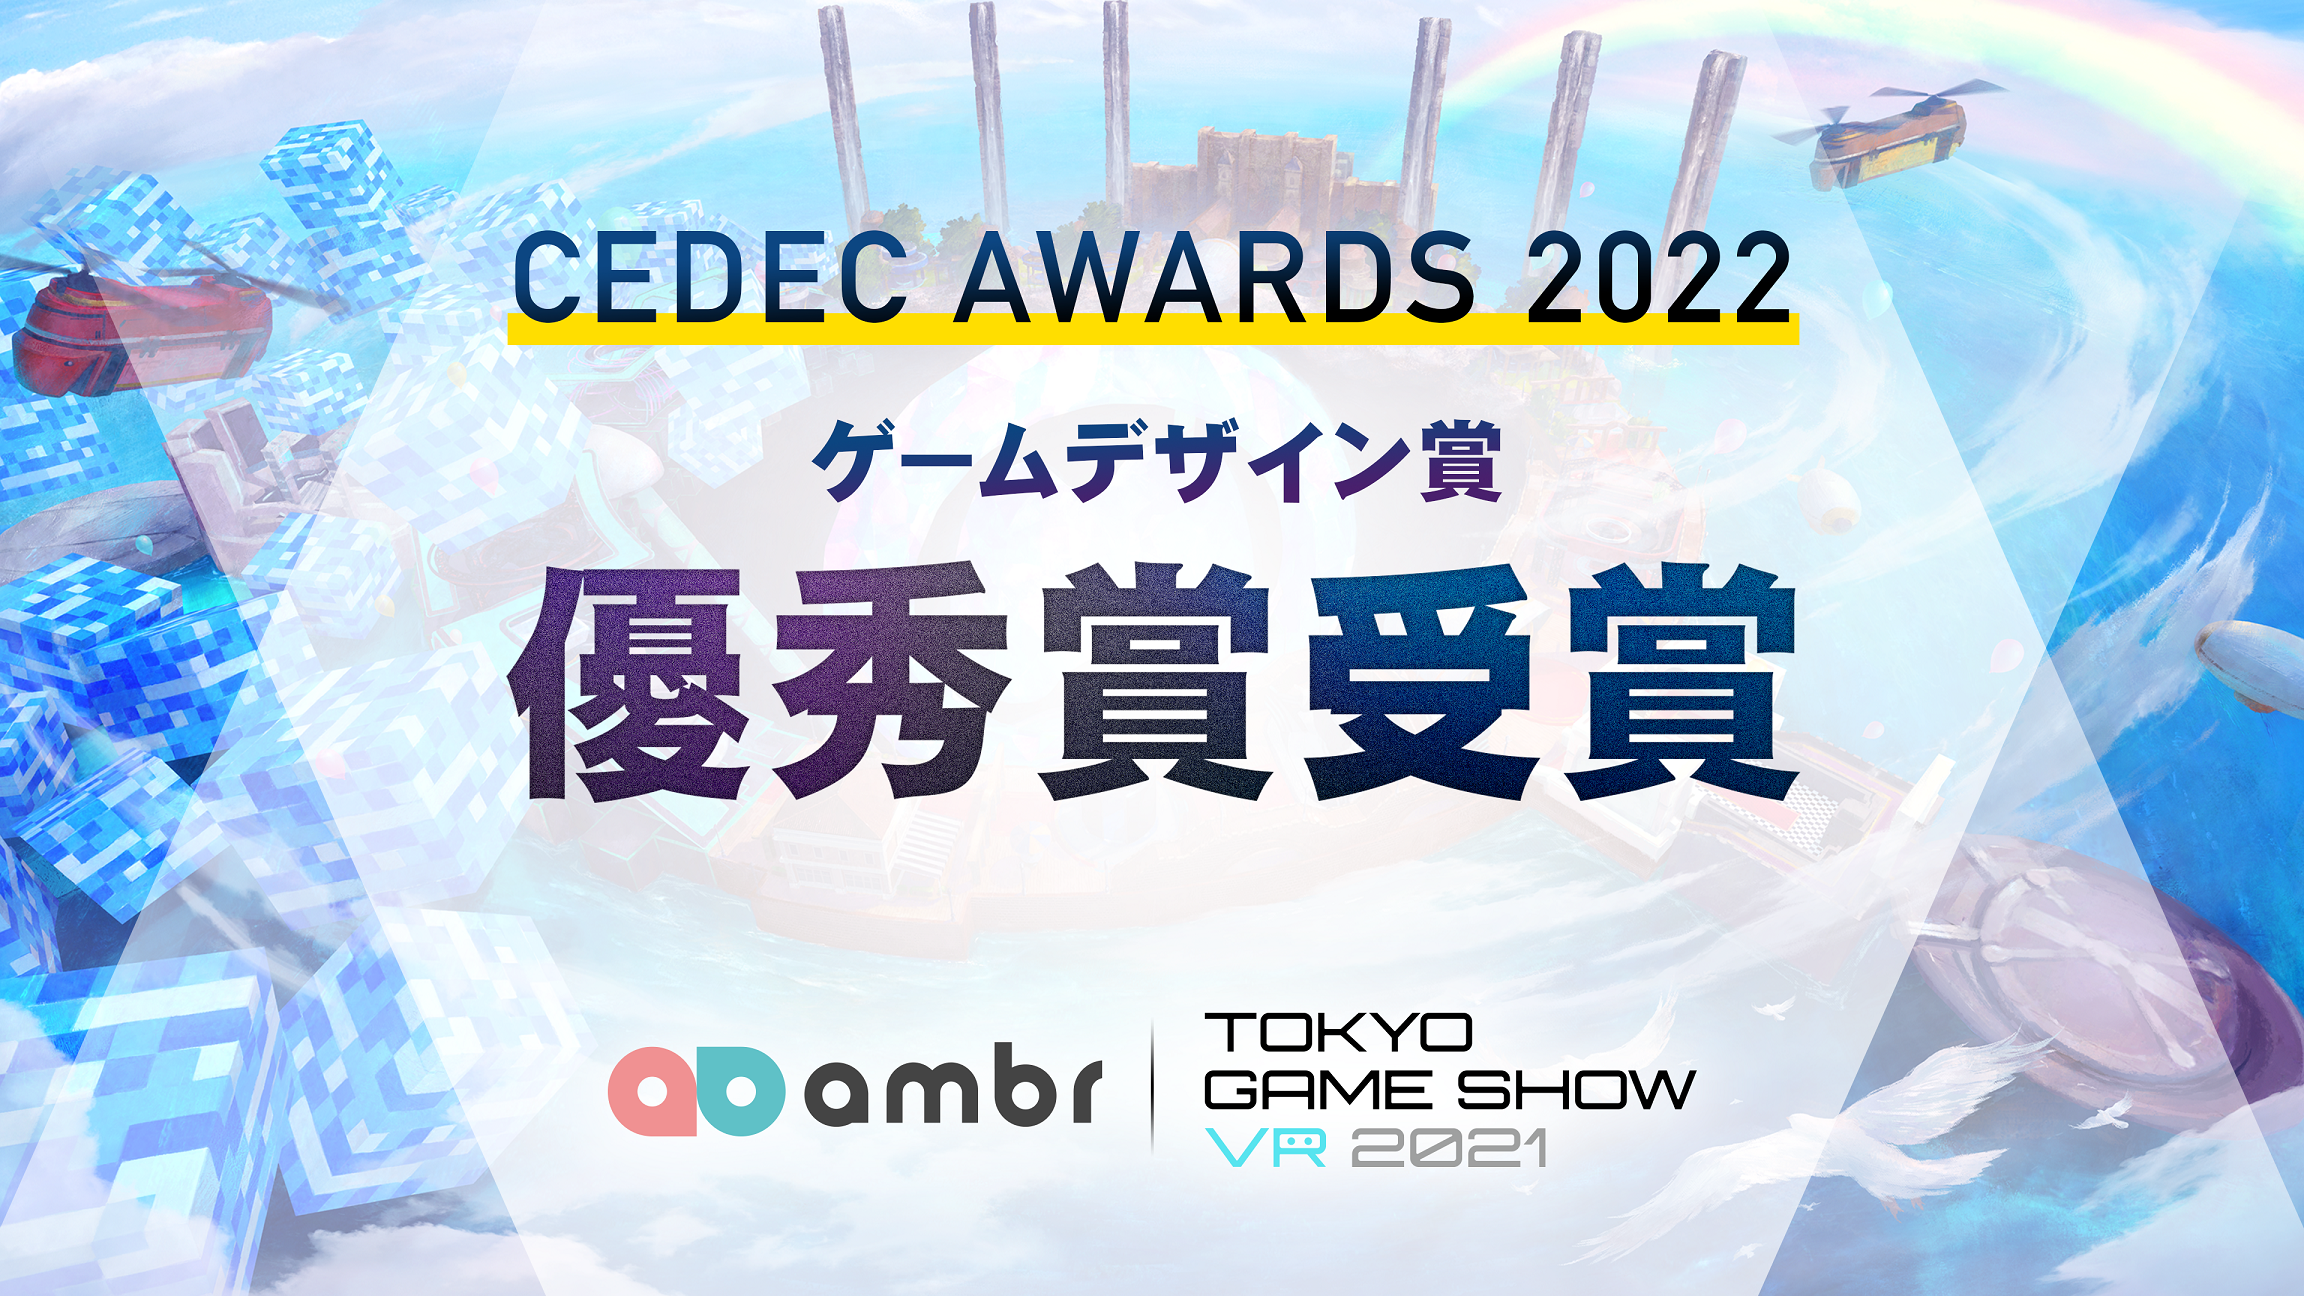 ambrが企画開発を手掛けた『TOKYO GAME SHOW VR 2021』開発チームが、CEDEC AWARDS 2022「ゲームデザイン部門」で優秀賞受賞！